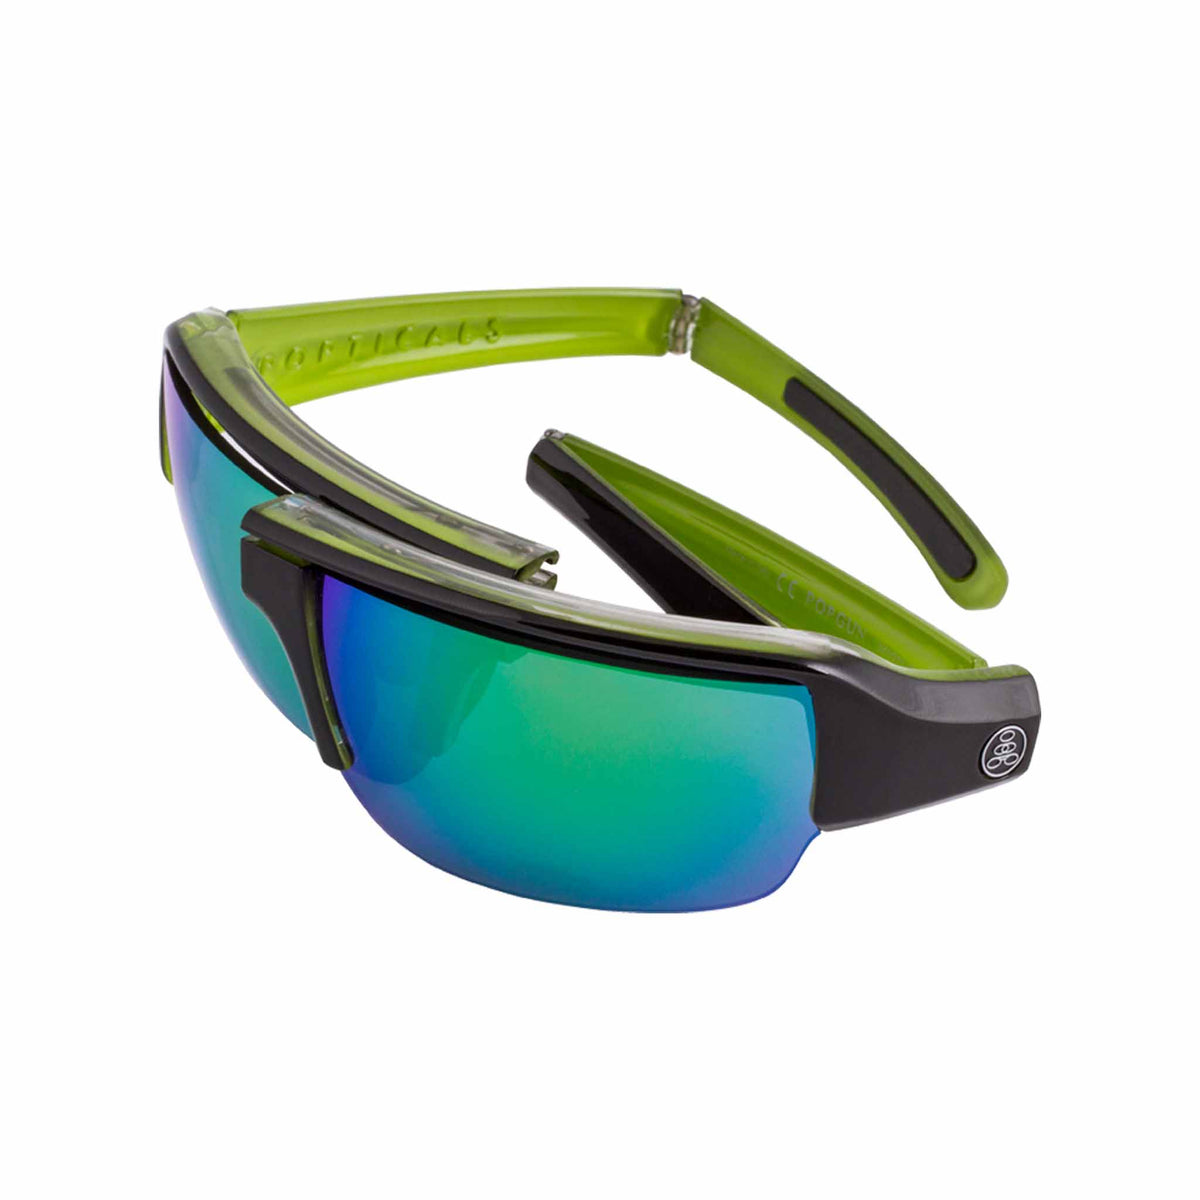 Popticals, Premium Compact Sunglasses, PopGun, 040010-GLEN, Polarized Sunglasses, Gloss Black over Green Crystal Frame, Gray Lenses w/Green Mirror Finish, Spider View